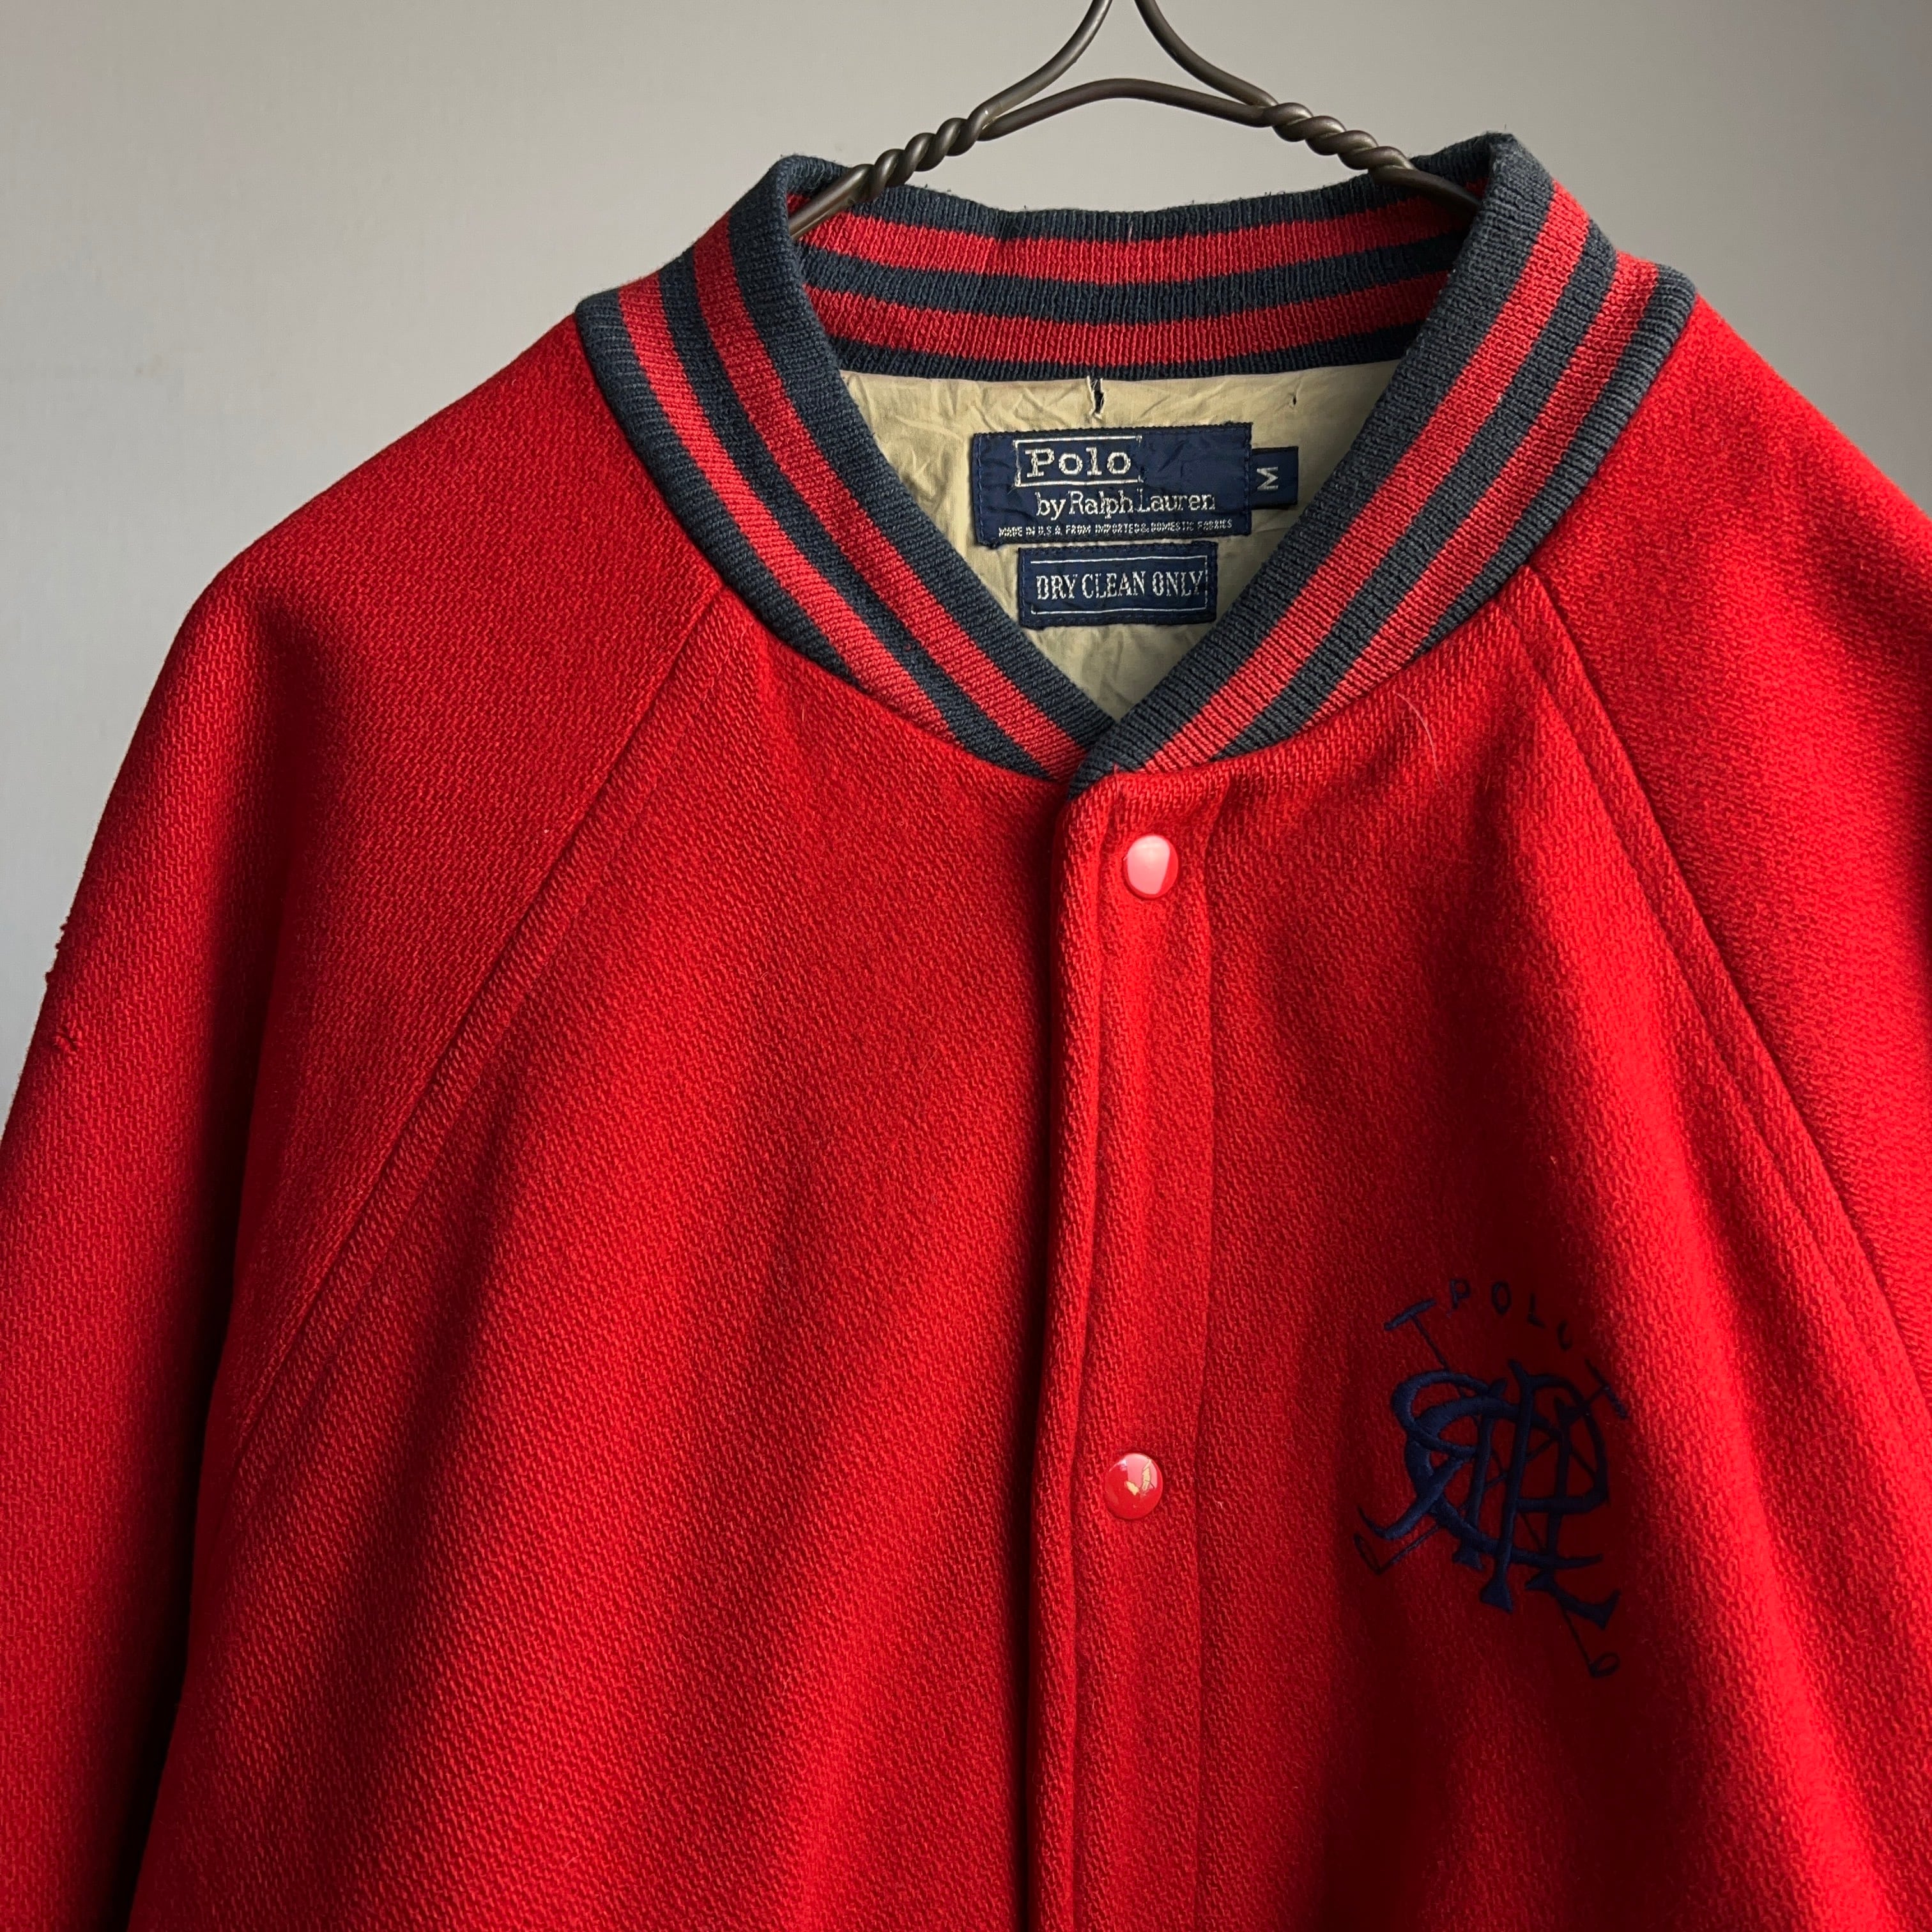 90's Polo by Ralph Lauren Stadium Jacket USA製 SIZE M 90年代 ポロラルフローレン スタジャン  刺繍 メルトン 赤【1000A652】【送料無料】